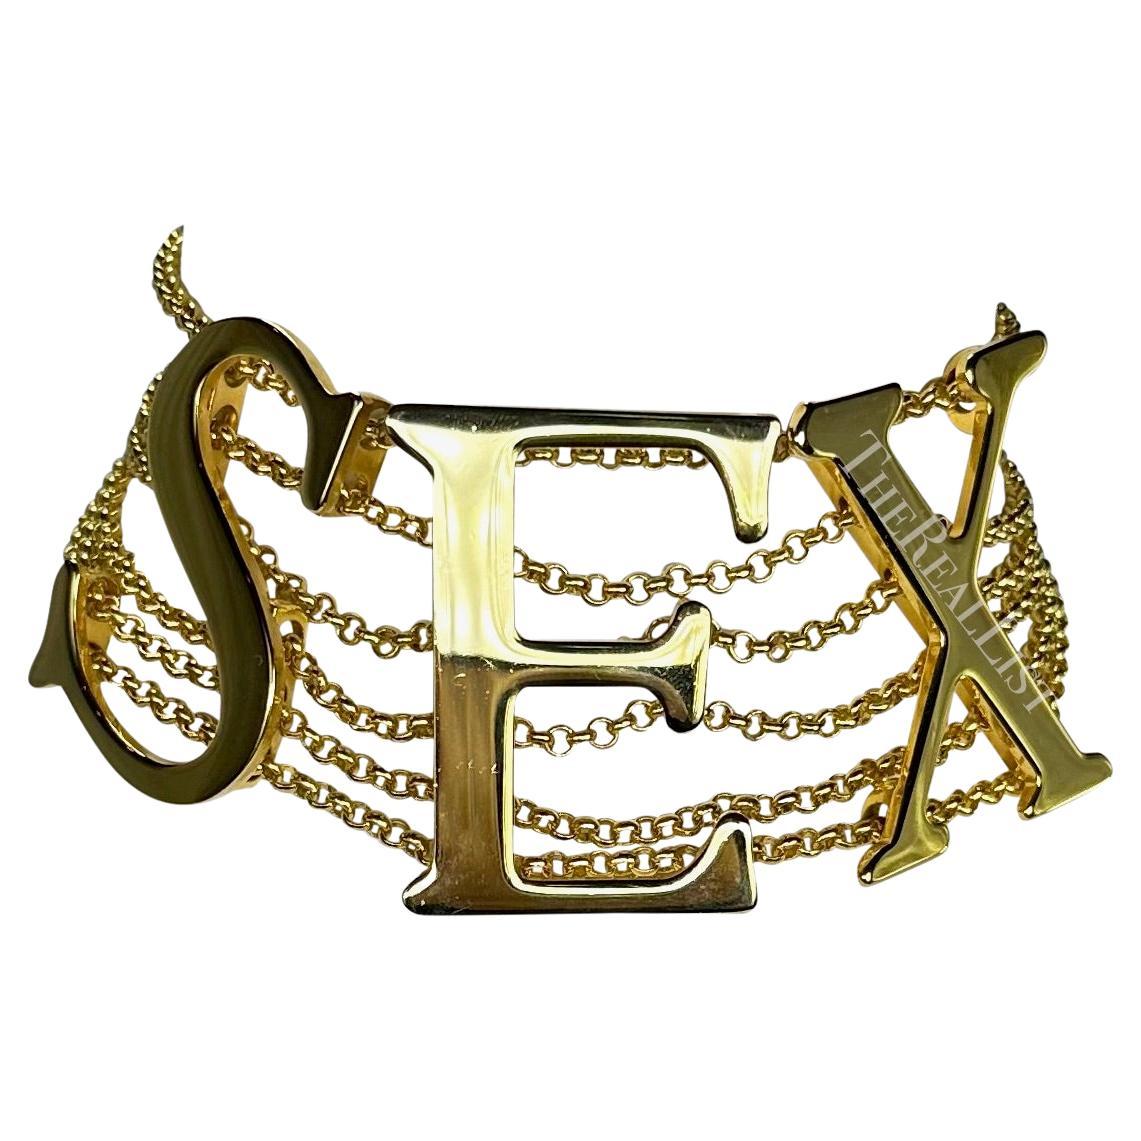 S/S 2003 Dolce & Gabbana 'Sex & Love' Runway Gold SEX Choker Necklace For Sale 4